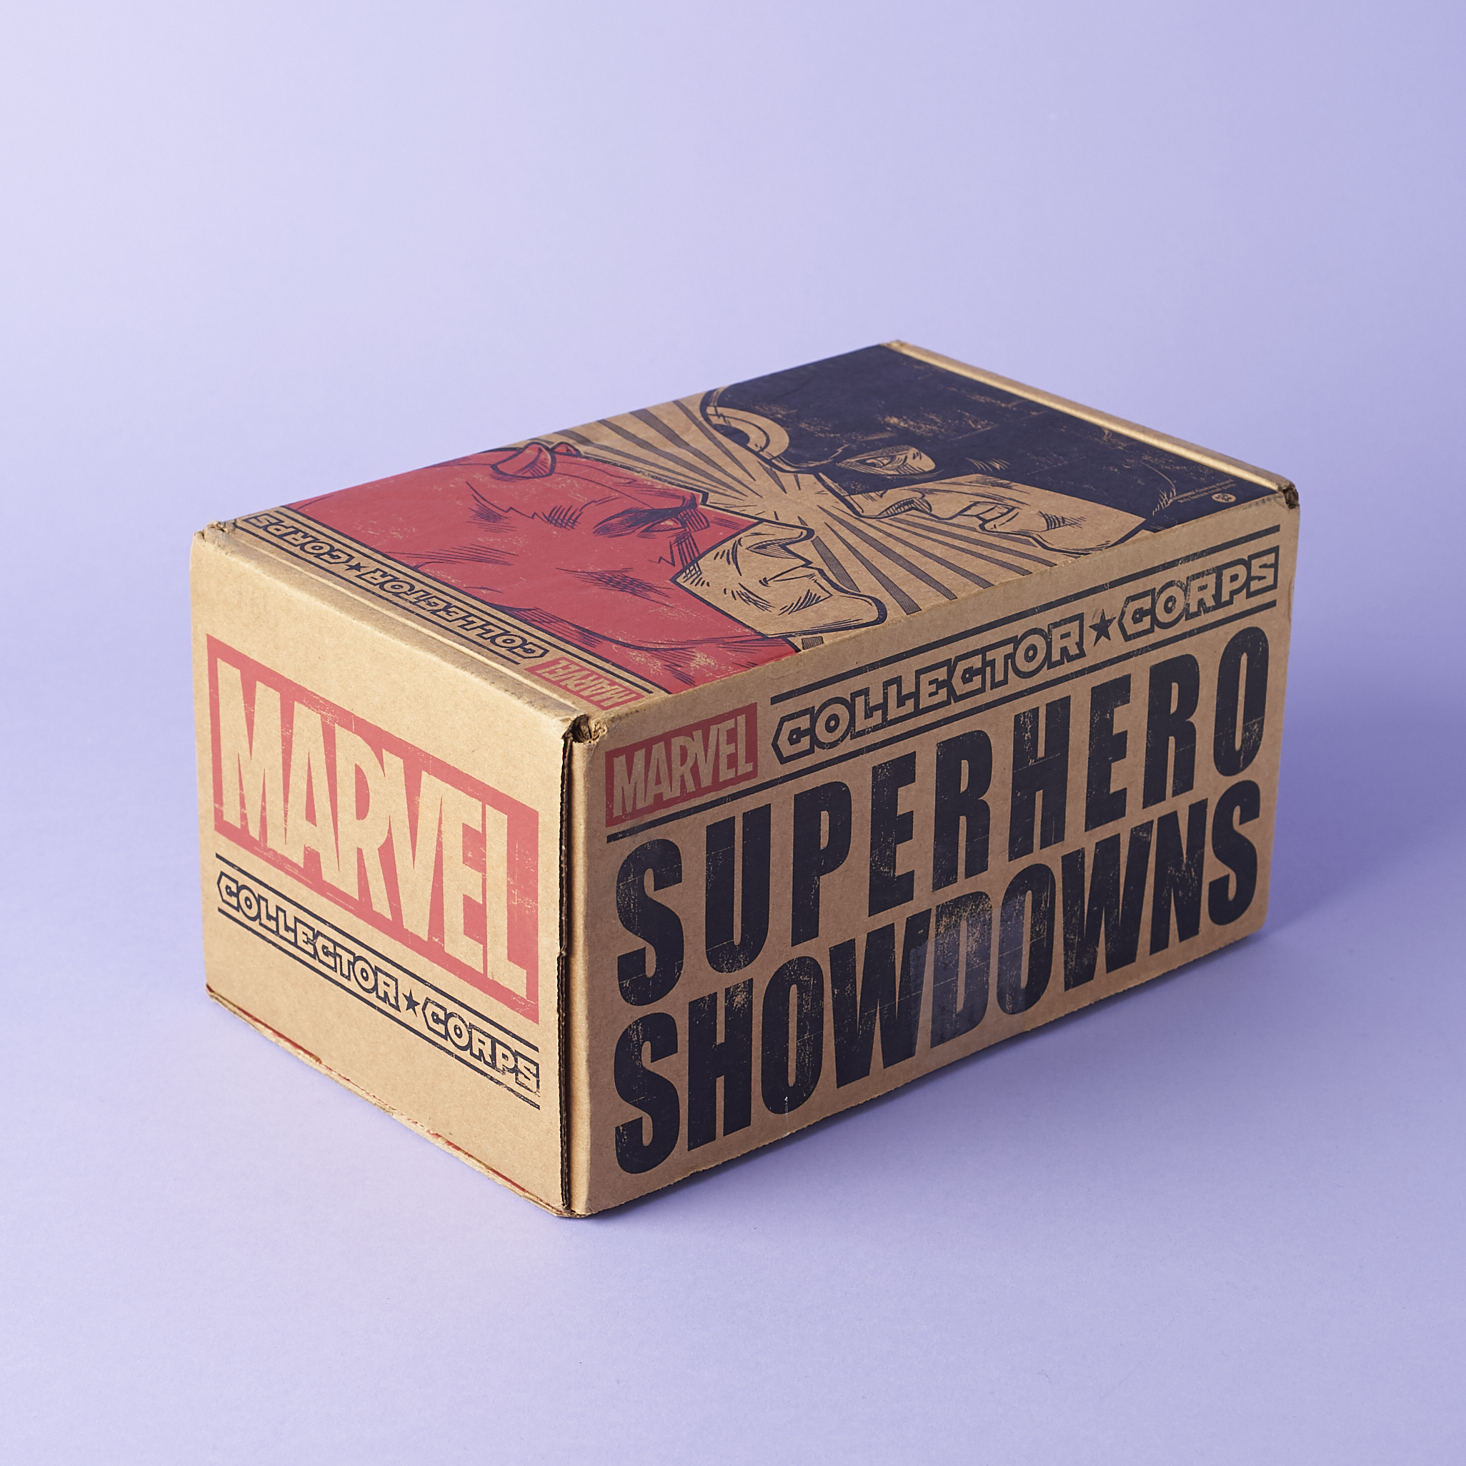 Marvel Collector Corps Review: Superhero Showdown – February 2017